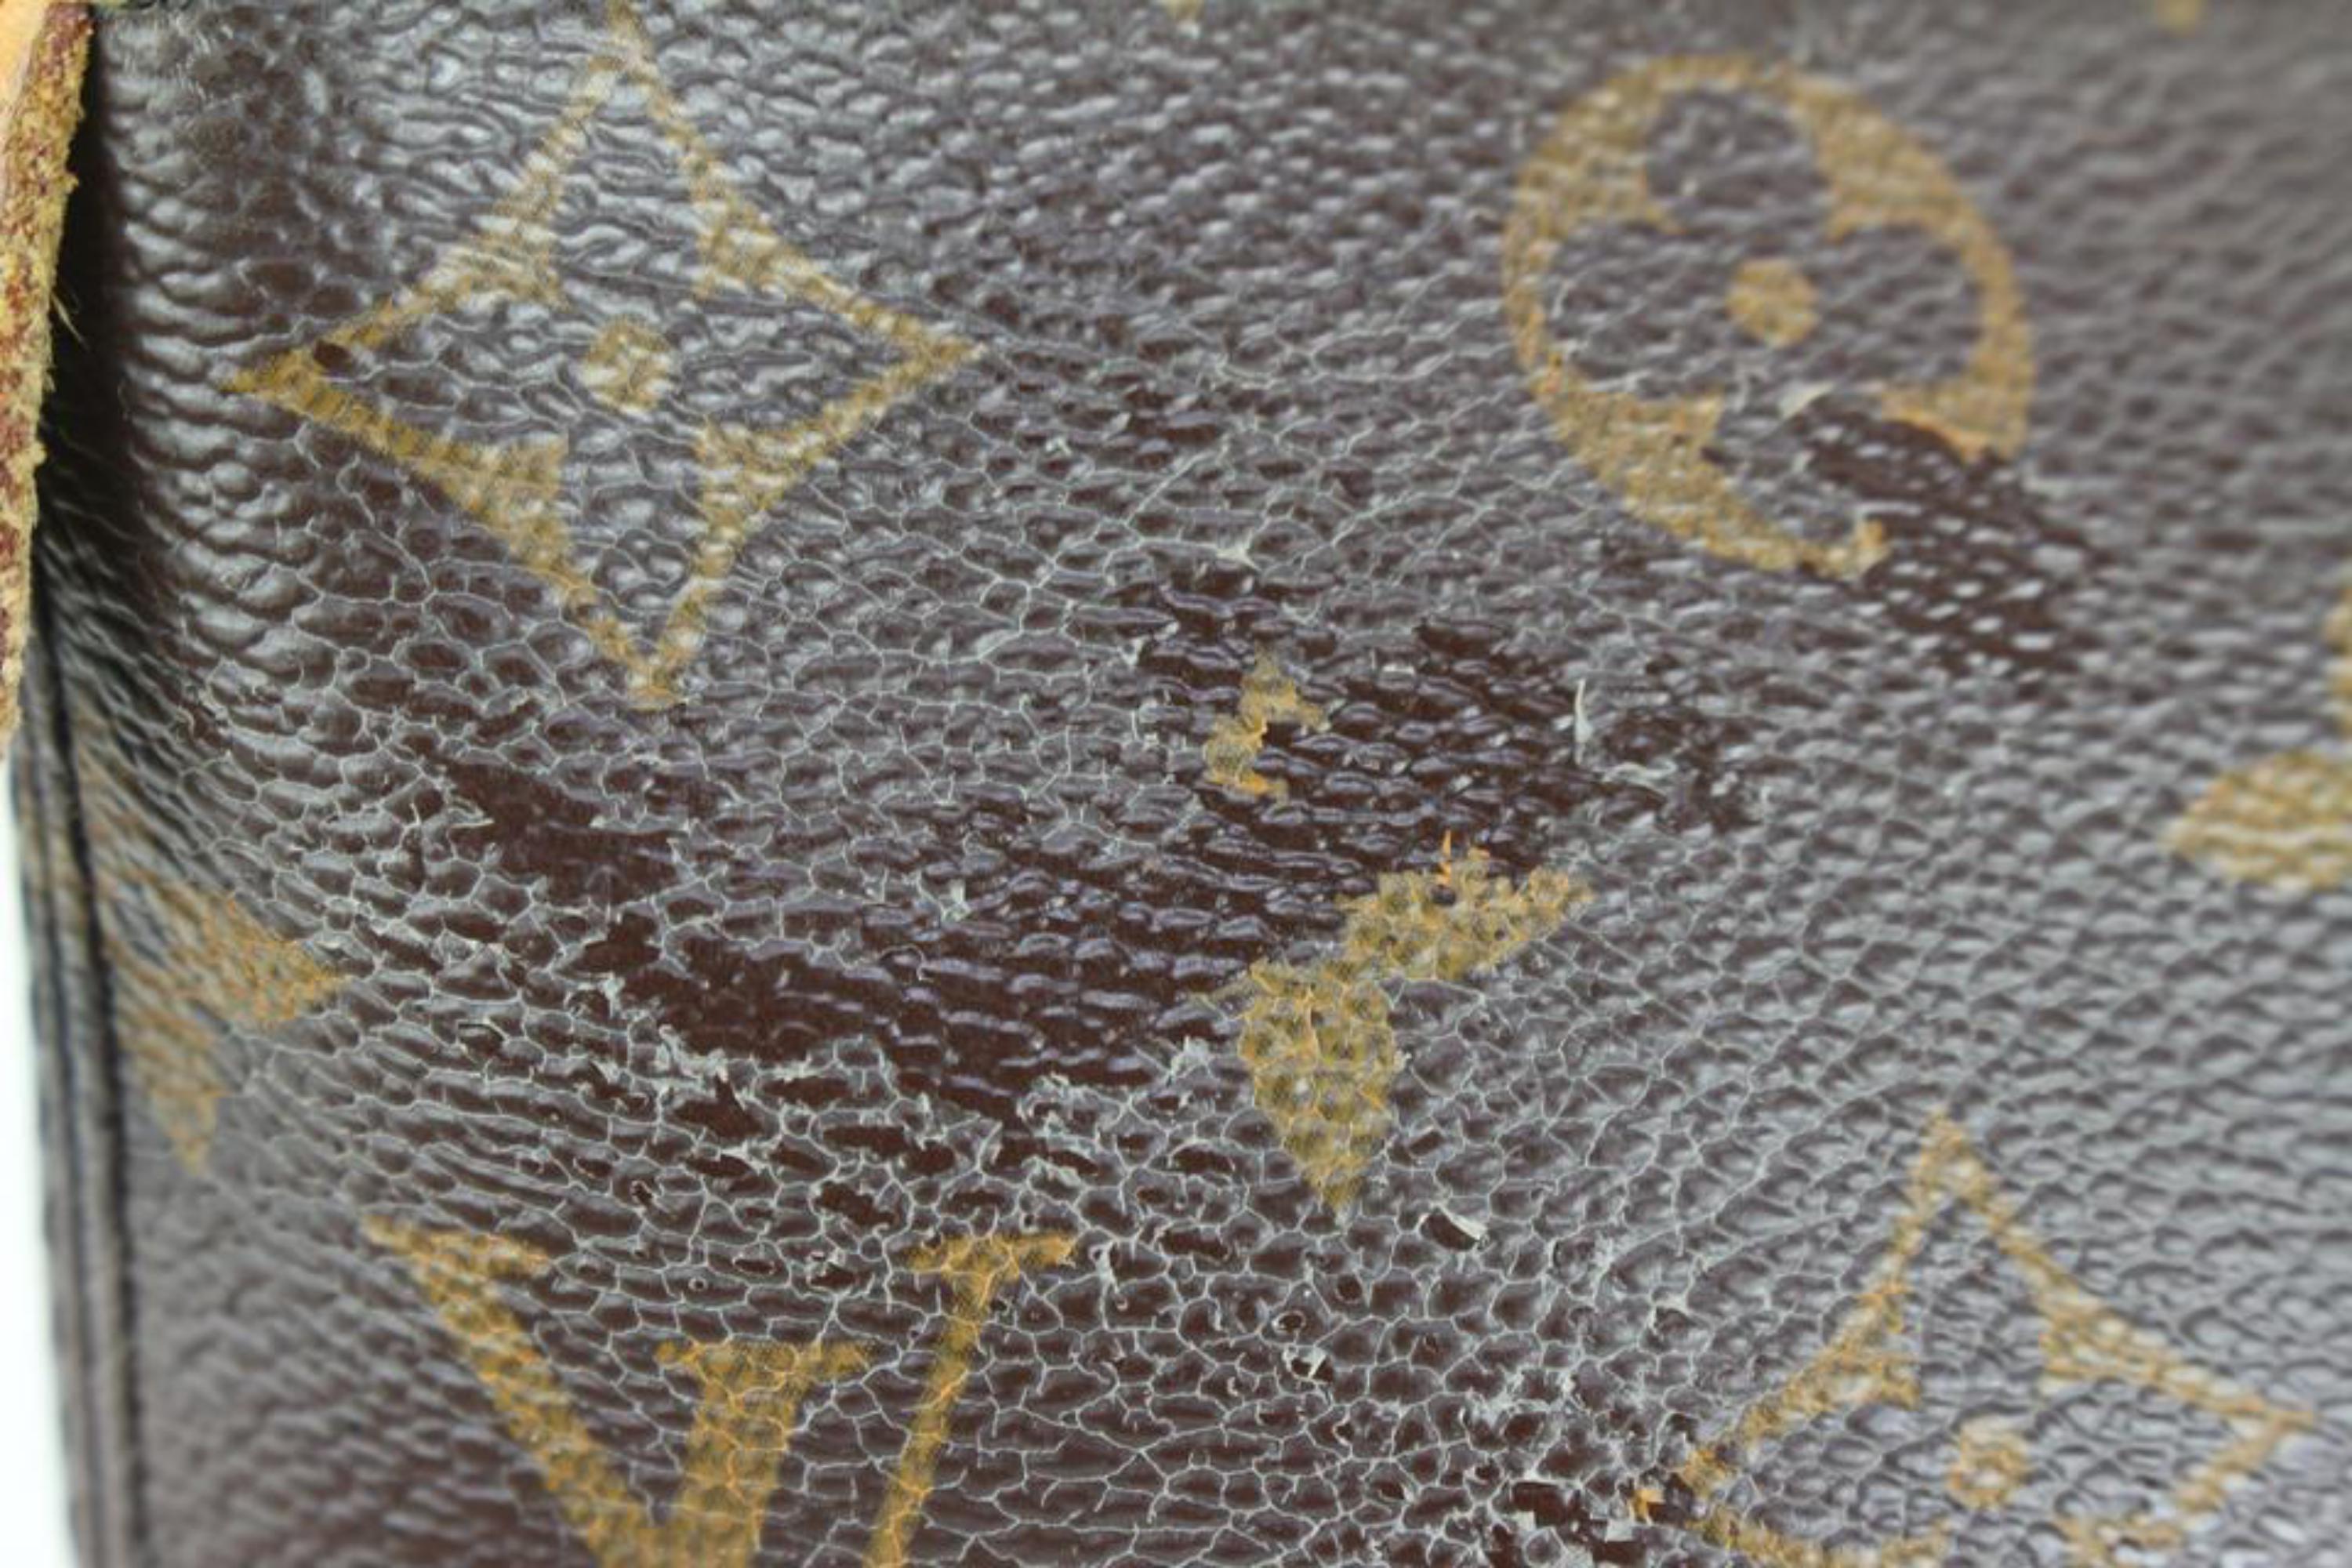 Louis Vuitton Discontinued Monogram Iena MM Zip Tote Shoulder Bag 79lk328s